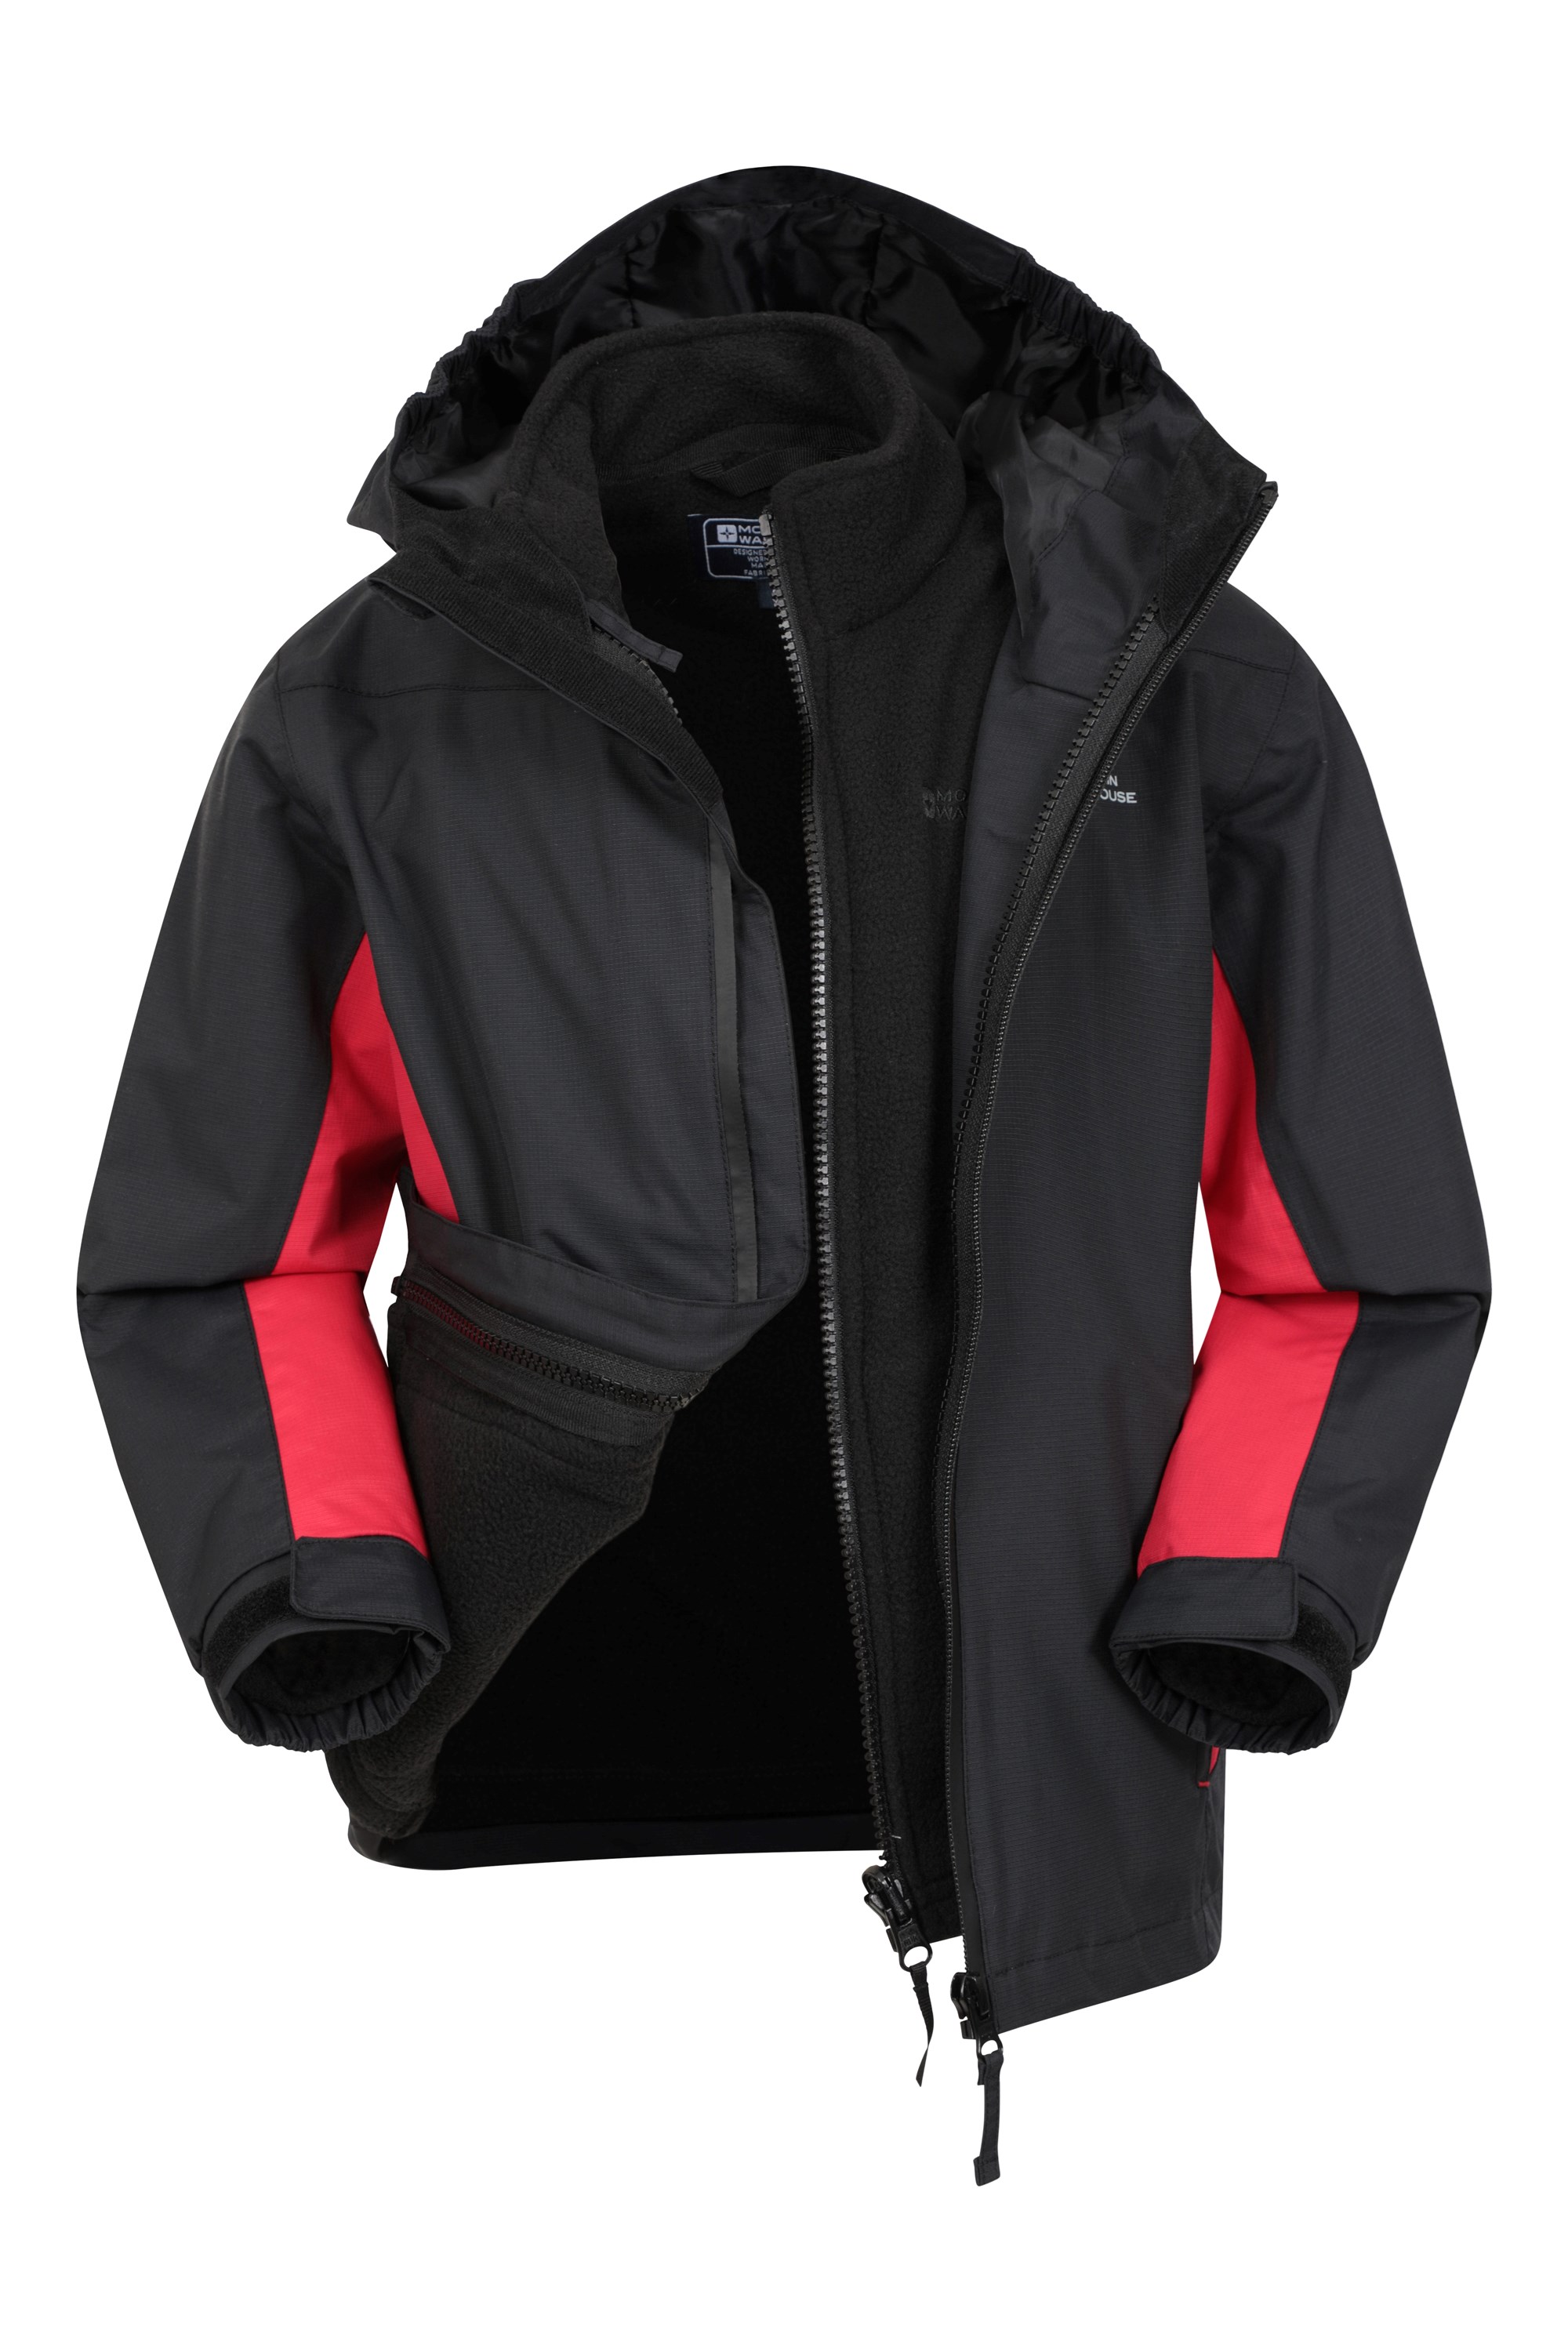 discount 40% Gray 14Y NoName waterproof jacket KIDS FASHION Jackets Fleece 